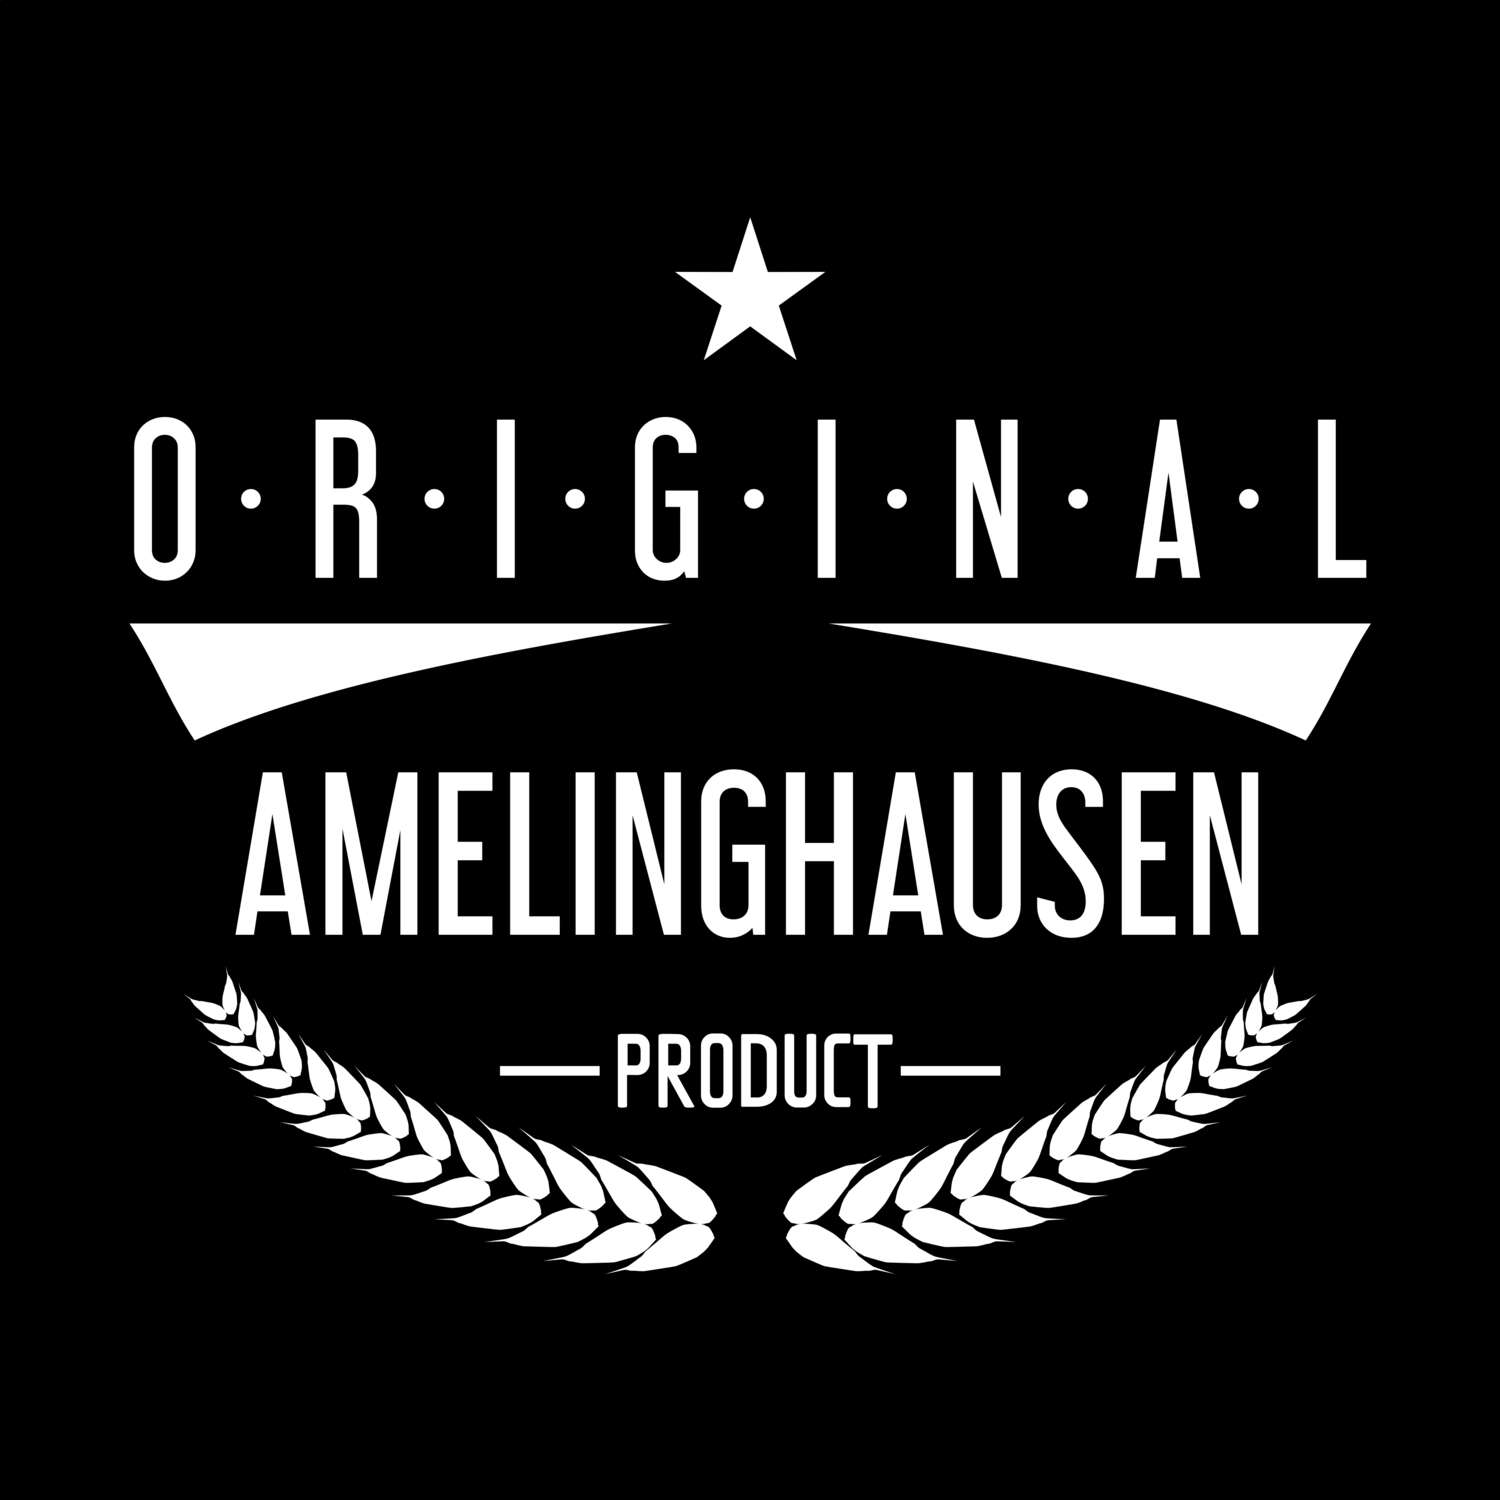 Amelinghausen T-Shirt »Original Product«